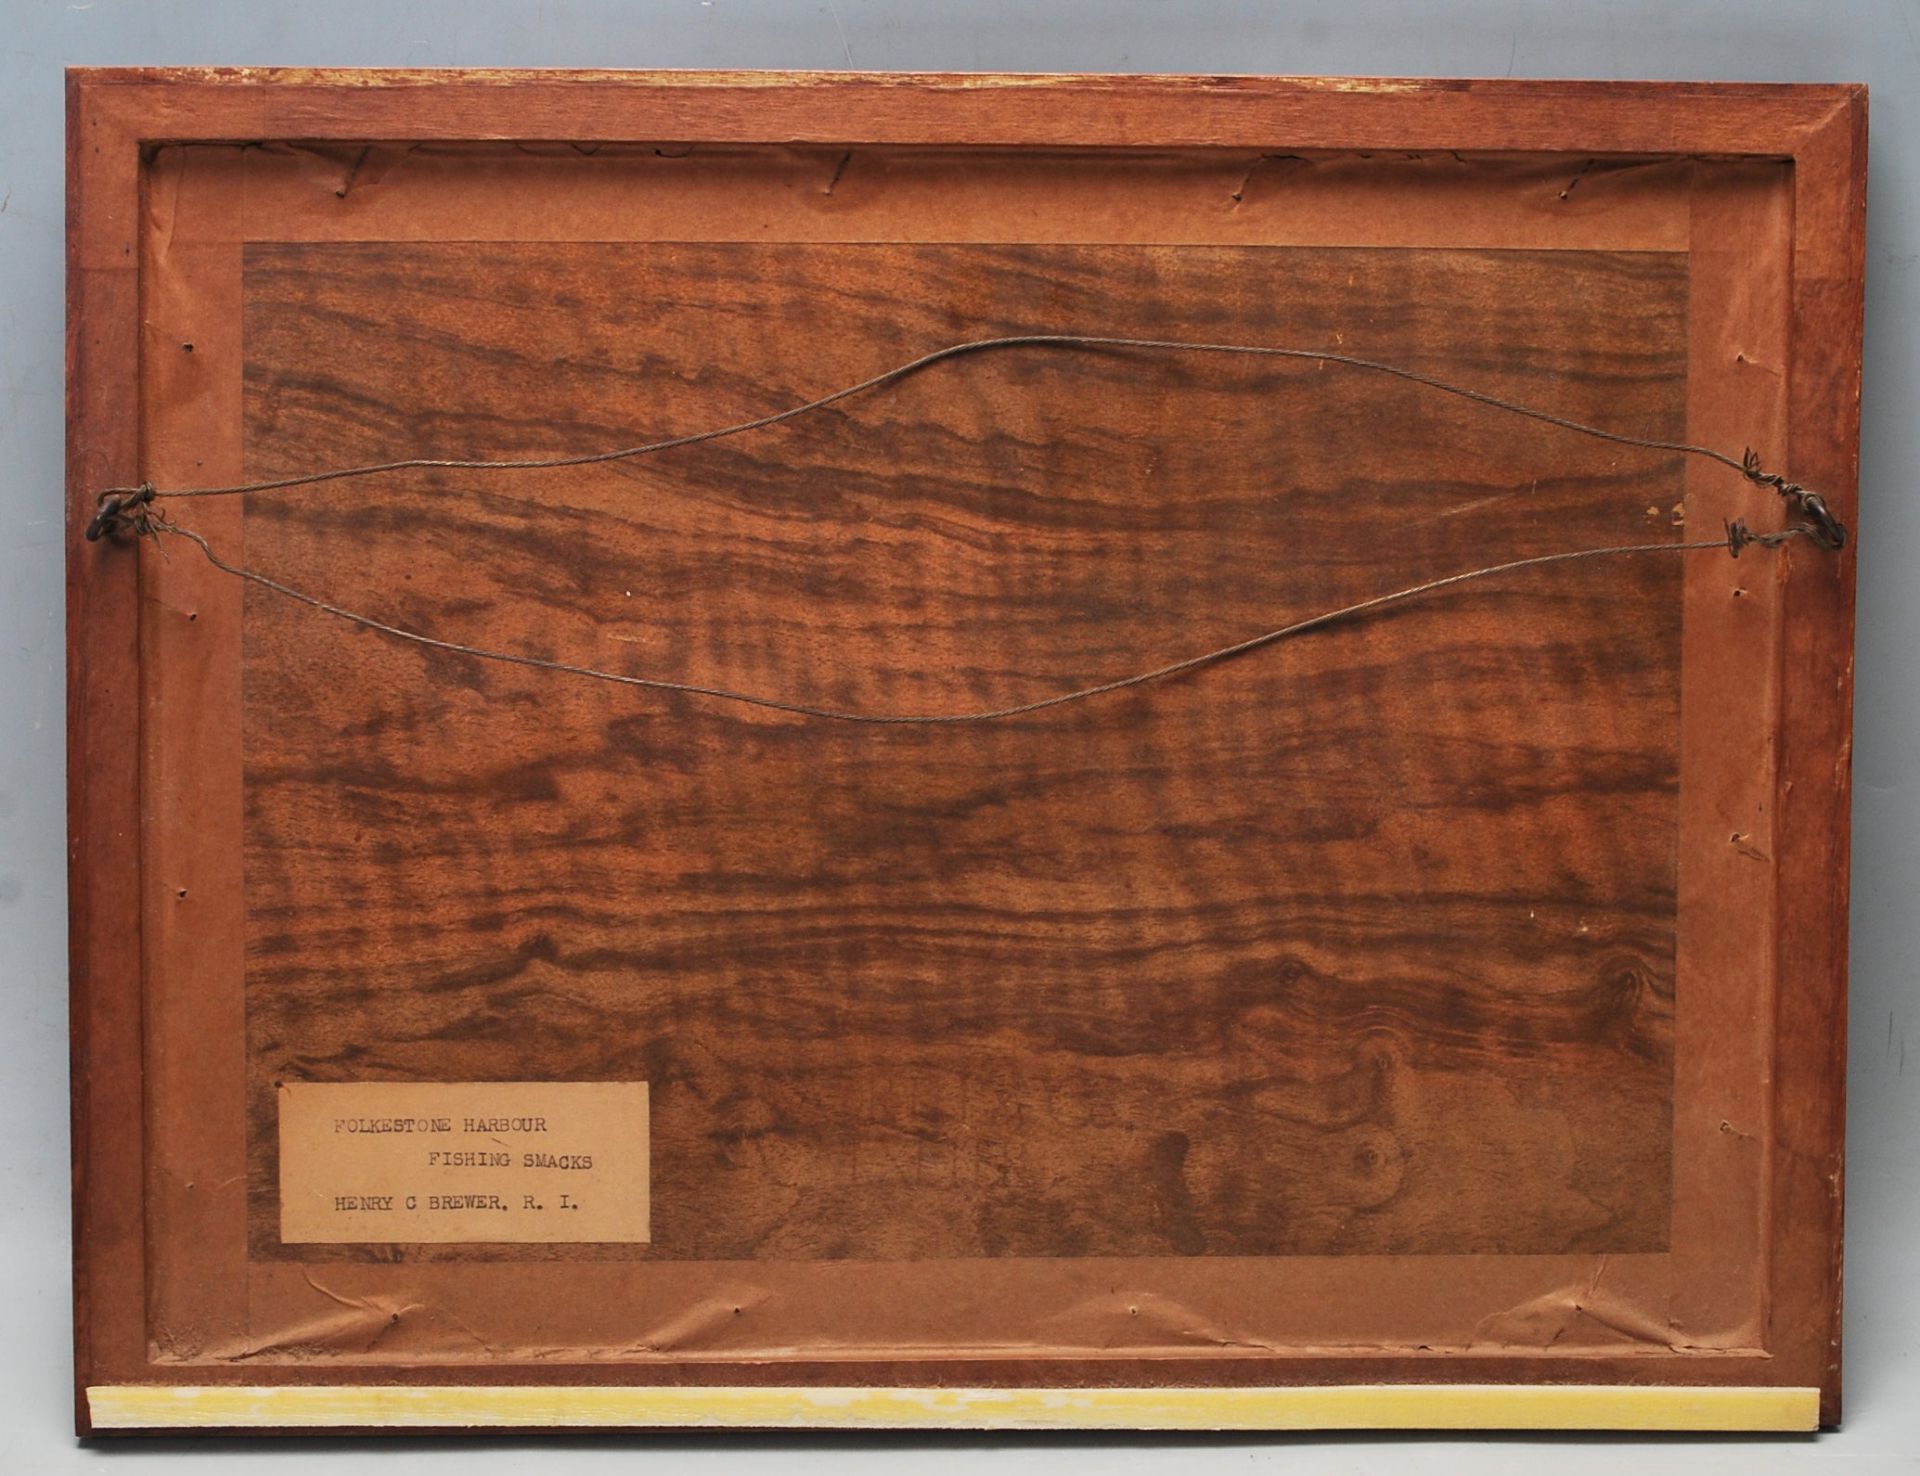 HENRY C. BREWER R.I. (1866-1950) - FOLKESTONE HARBOUR - FISHING SMACKS - Image 5 of 6